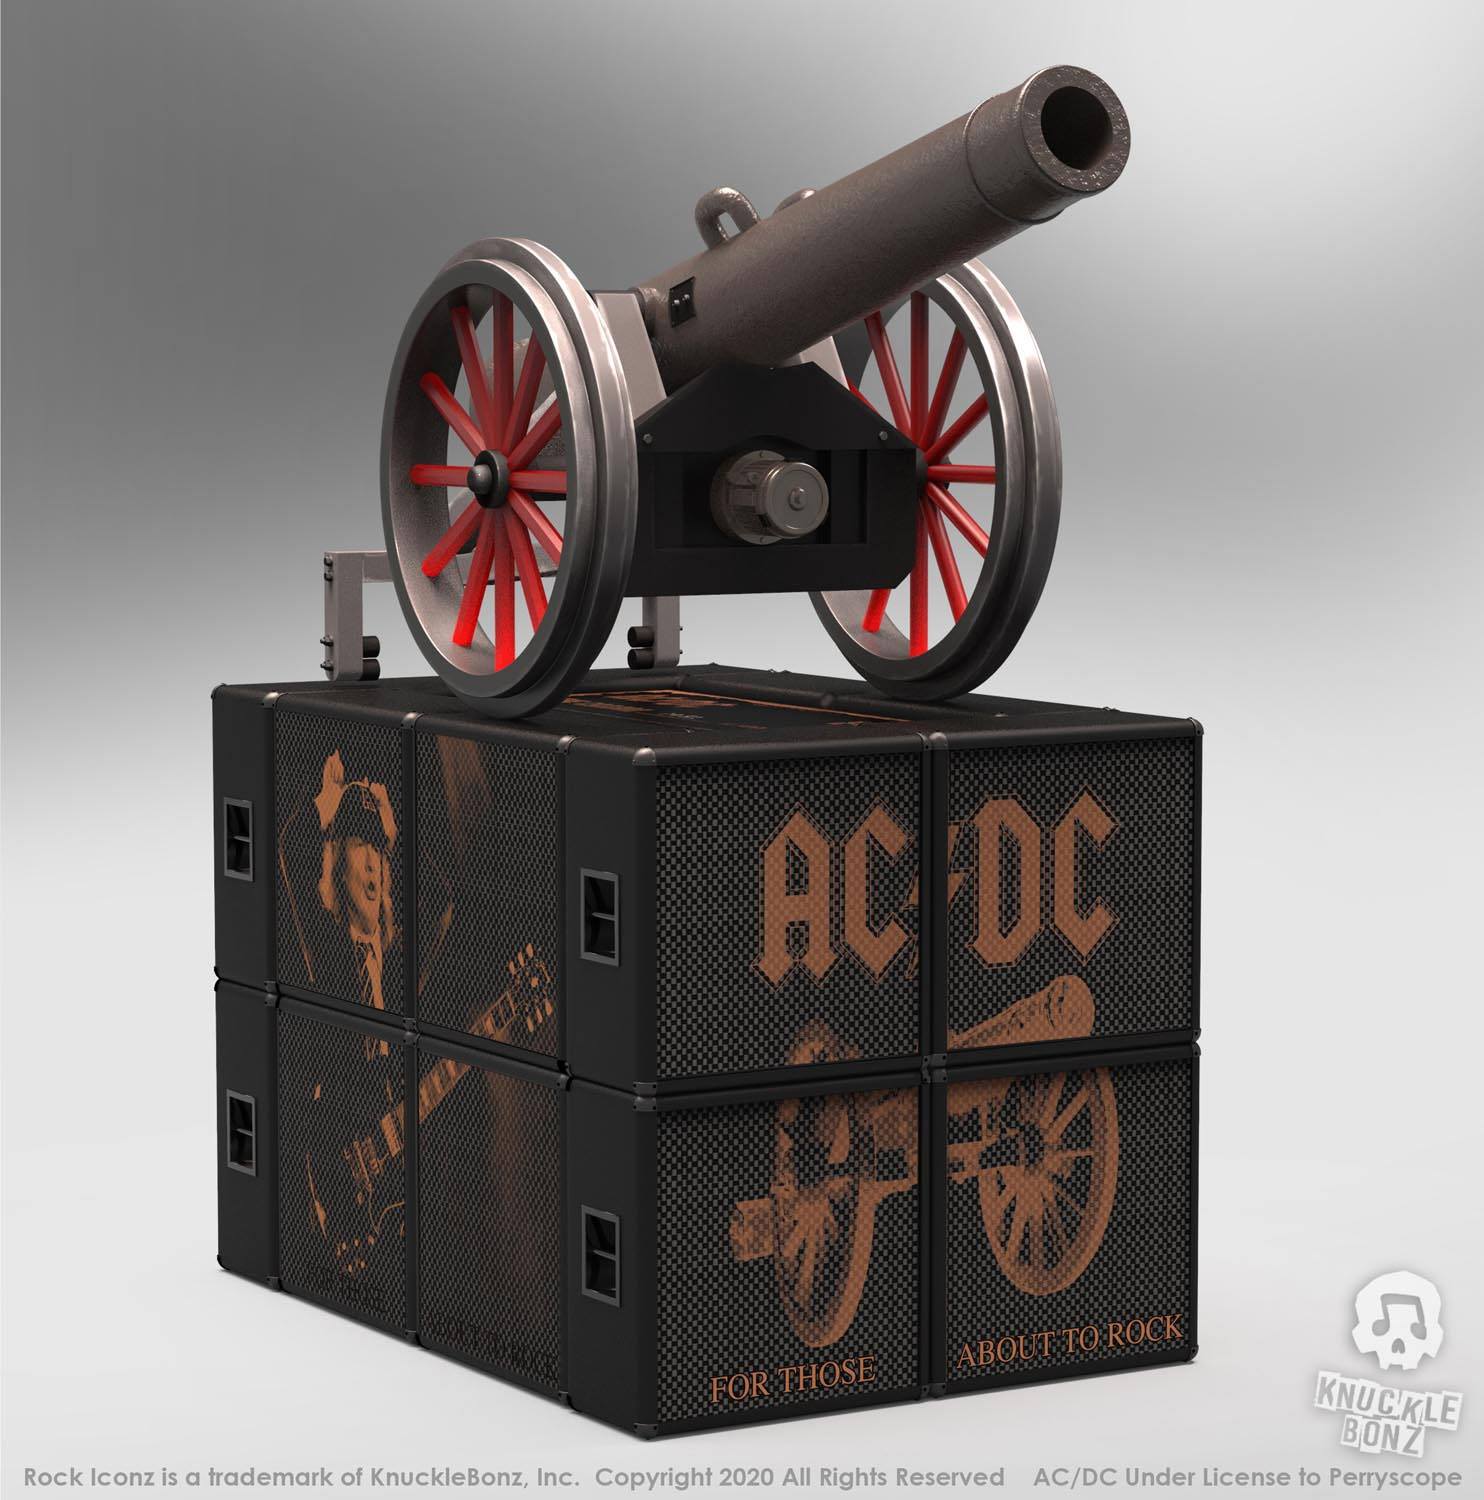 Estatua AC/DC Cannon For Those About to Rock, Rock Ikonz On Tour Knucklebonz